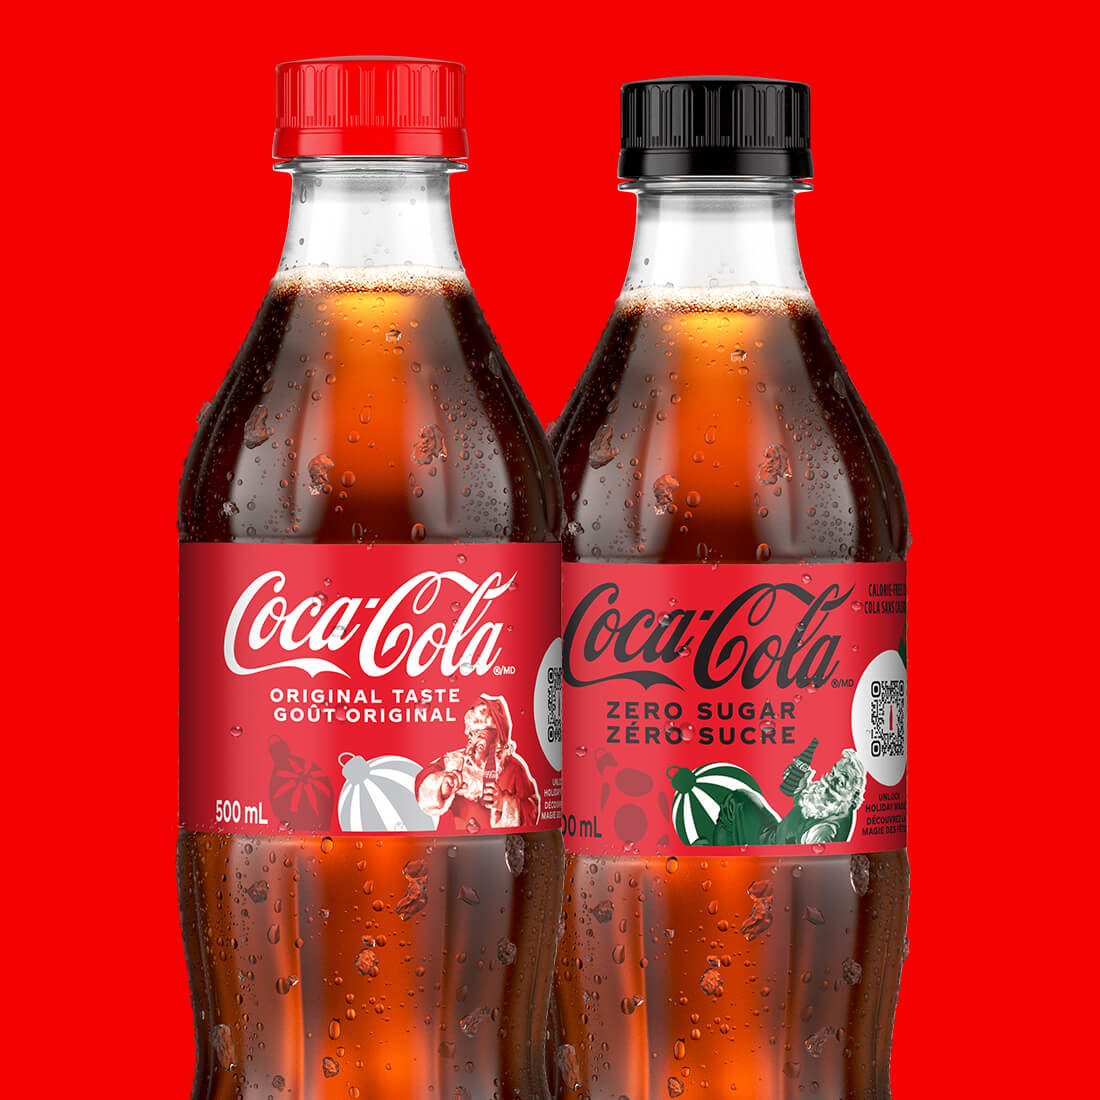 Coca-Cola Original Taste and Zero Sugar, 500 mL bottle